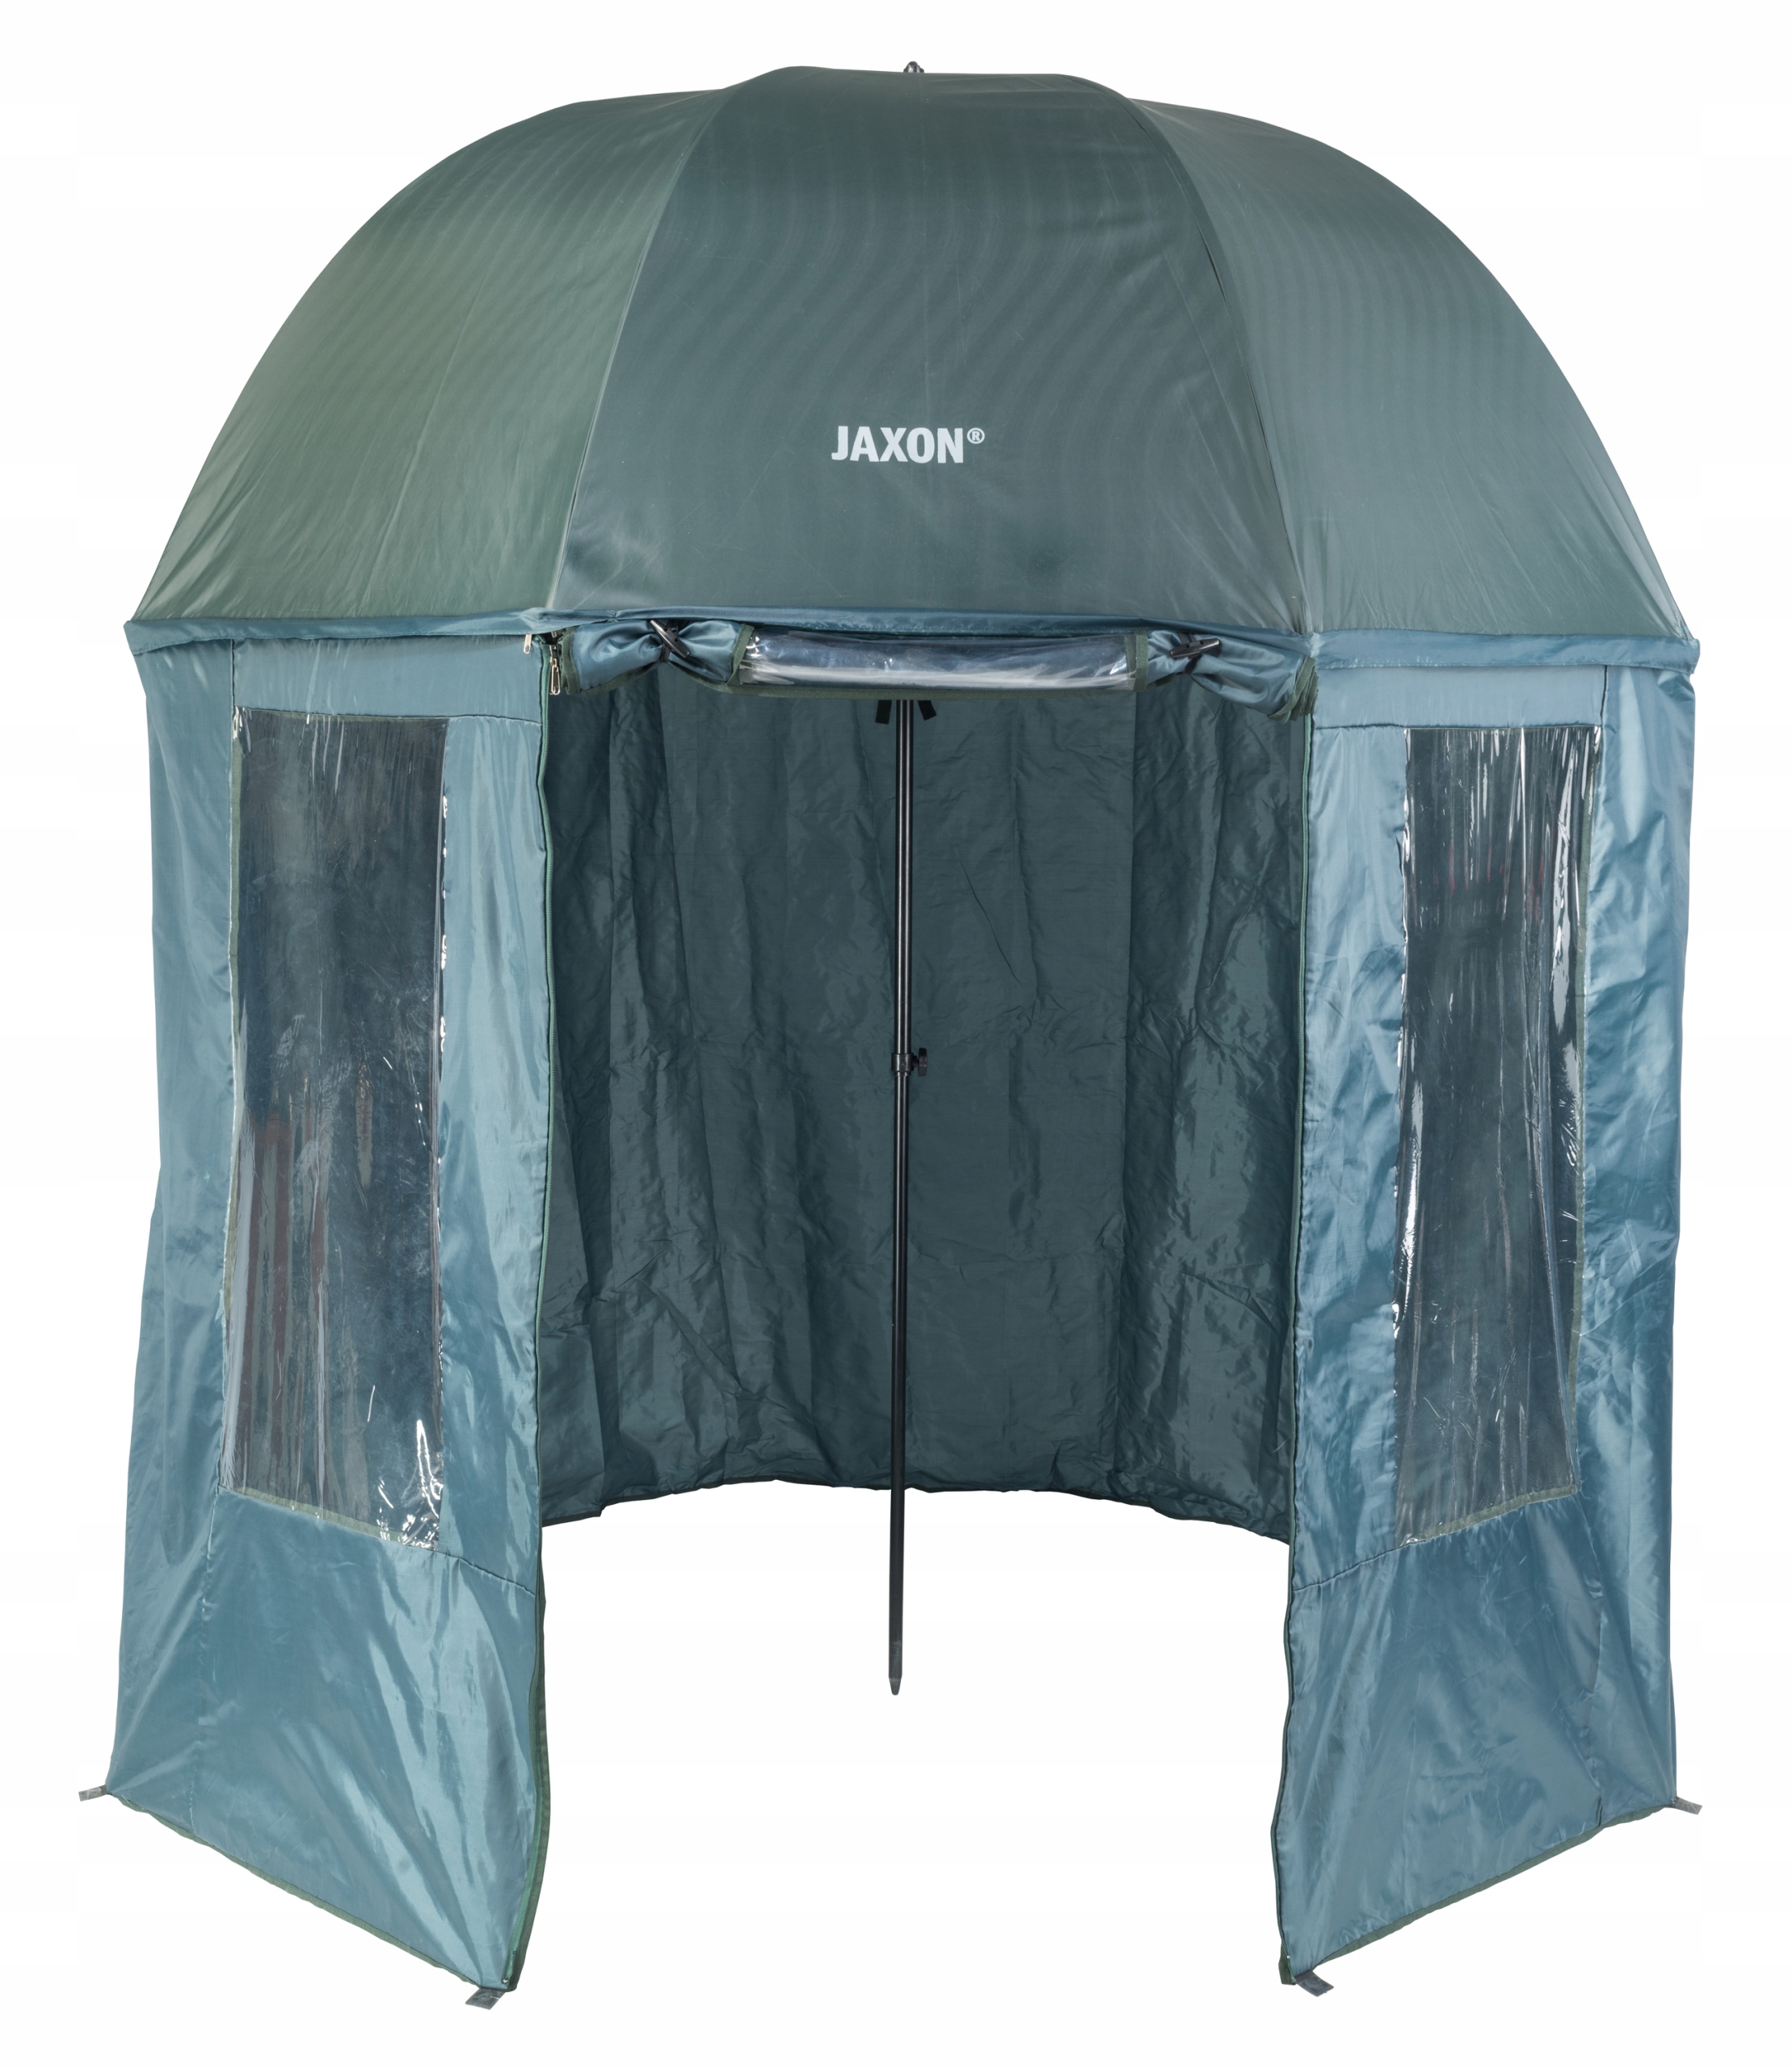 Палатки зонтичного типа. Зонт рыболовный Jaxon АК-plx150tx. Зонт-палатка Jaxon 250cm. Зонт-палатка рыболовный Jaxon AK-plx125tx описание. Зонт Jaxon AK-kzs040 250 см.